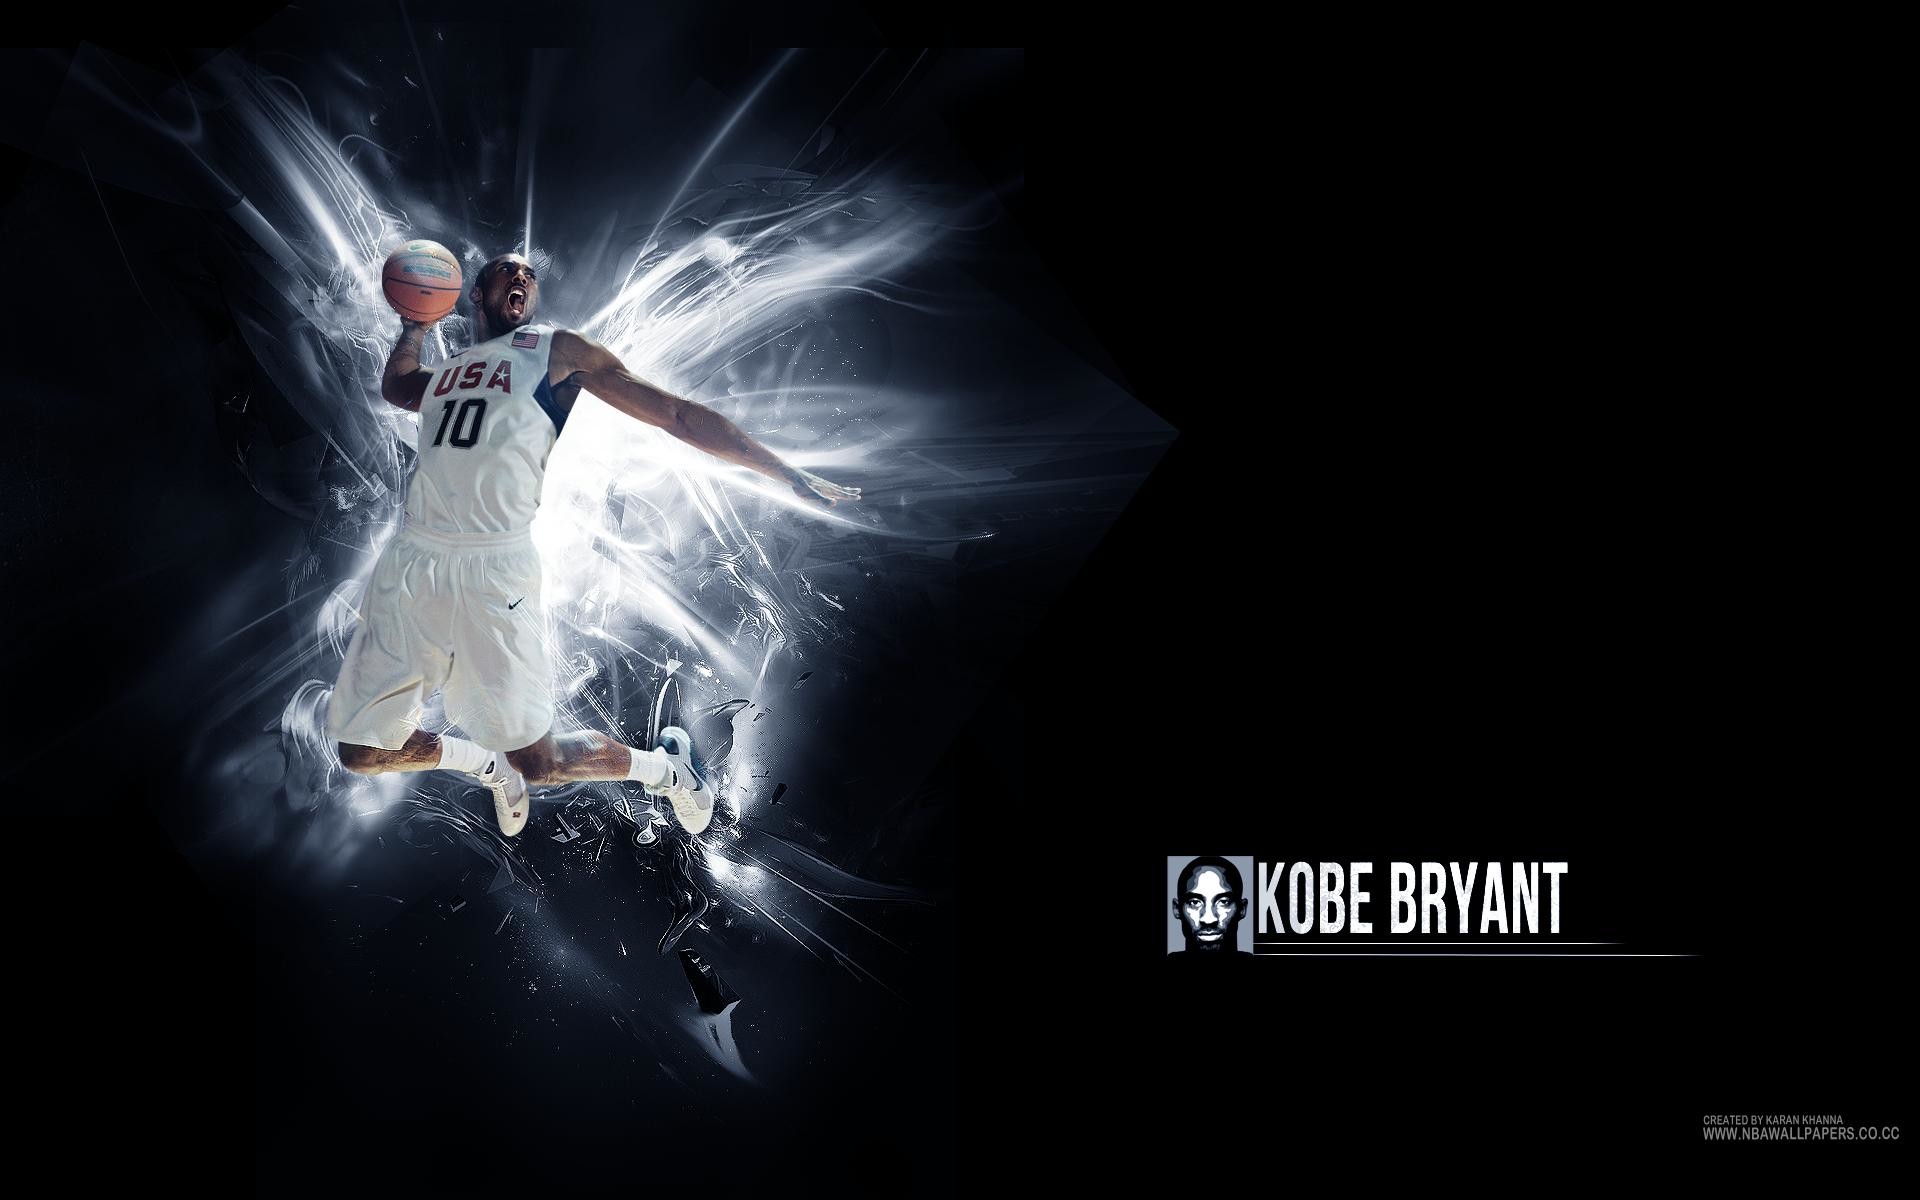 Обои с 24 ультра. Kobe Bryant. Kobe Bryant обои. Коби Брайант обои на рабочий стол. Коби Брайант обои на телефон.